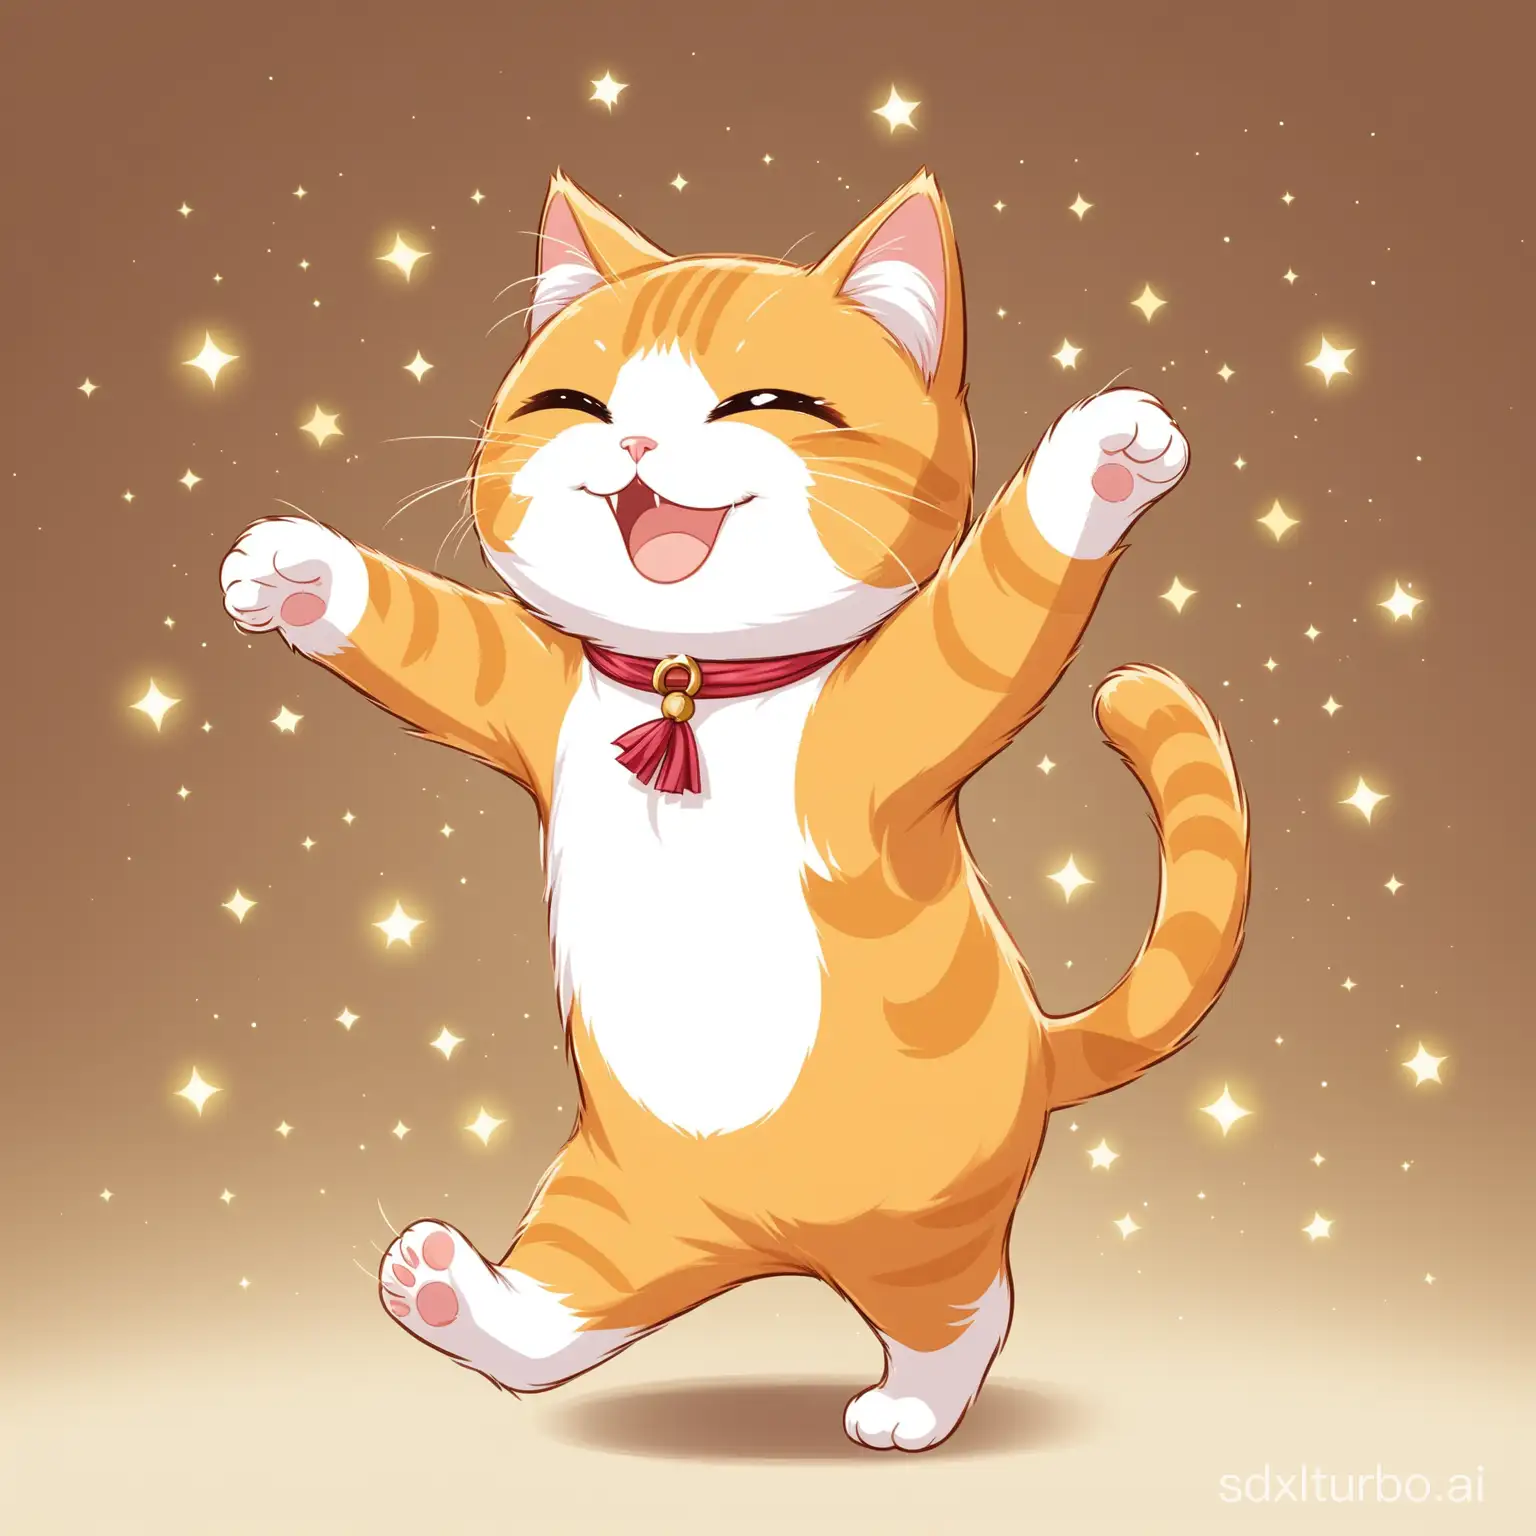 Joyful-Cat-Dancing-with-Elegance-and-Grace